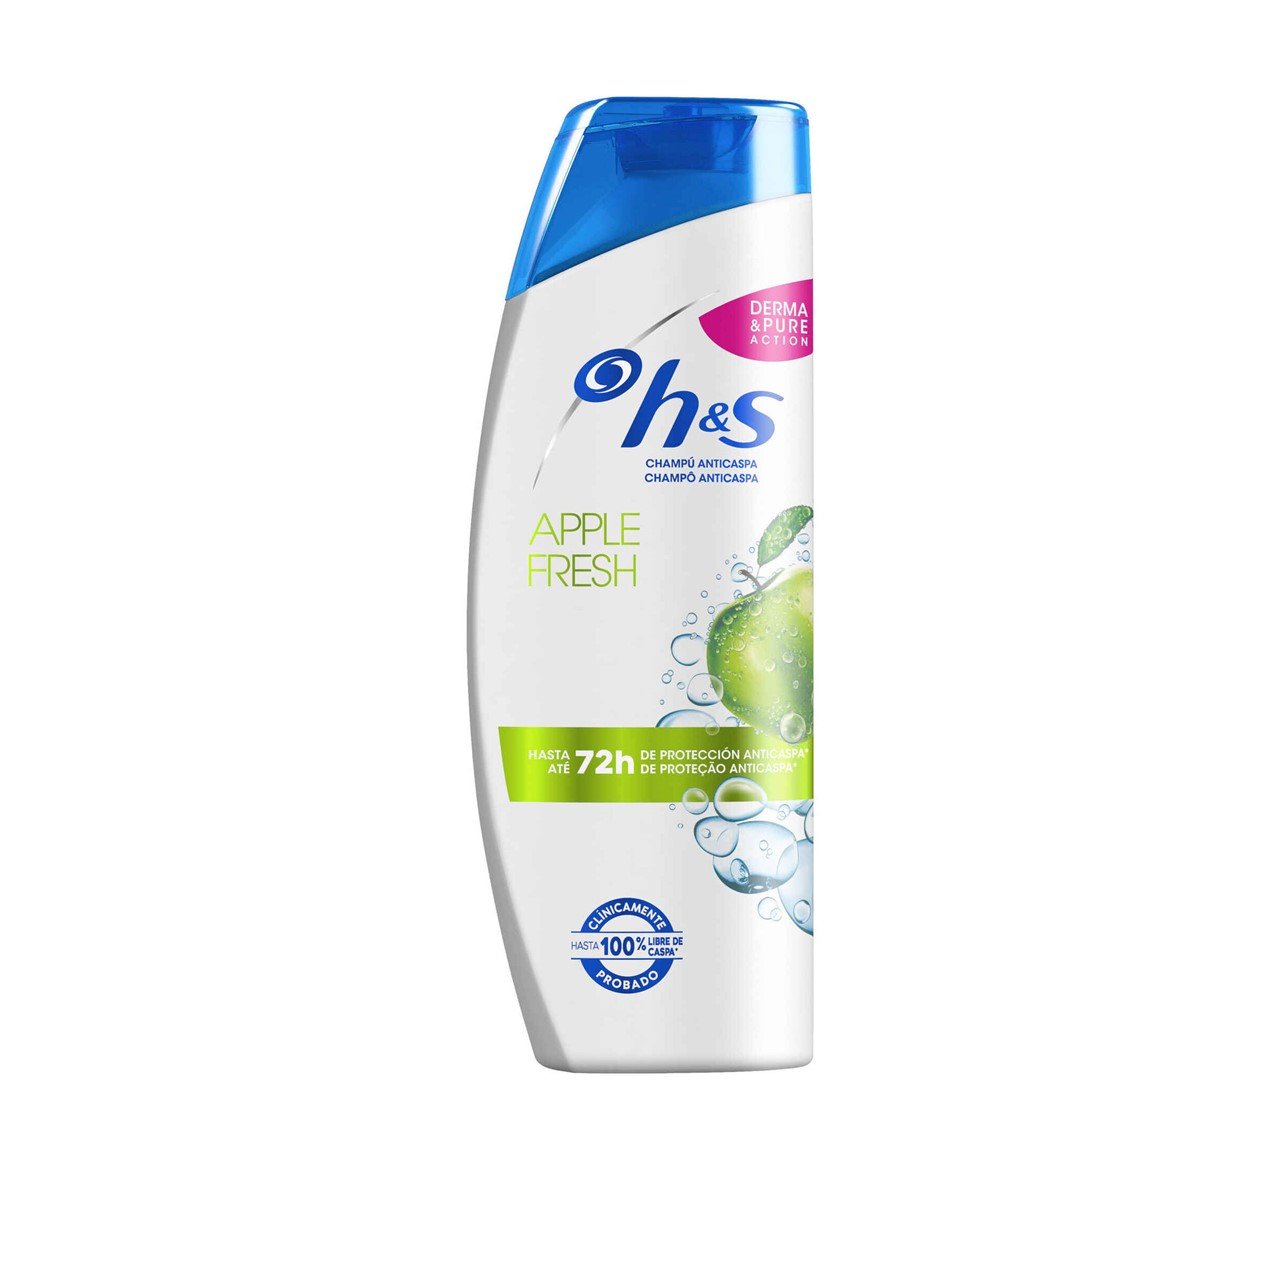 H&S Apple Fresh Shampoo 650ml (21.98fl oz)